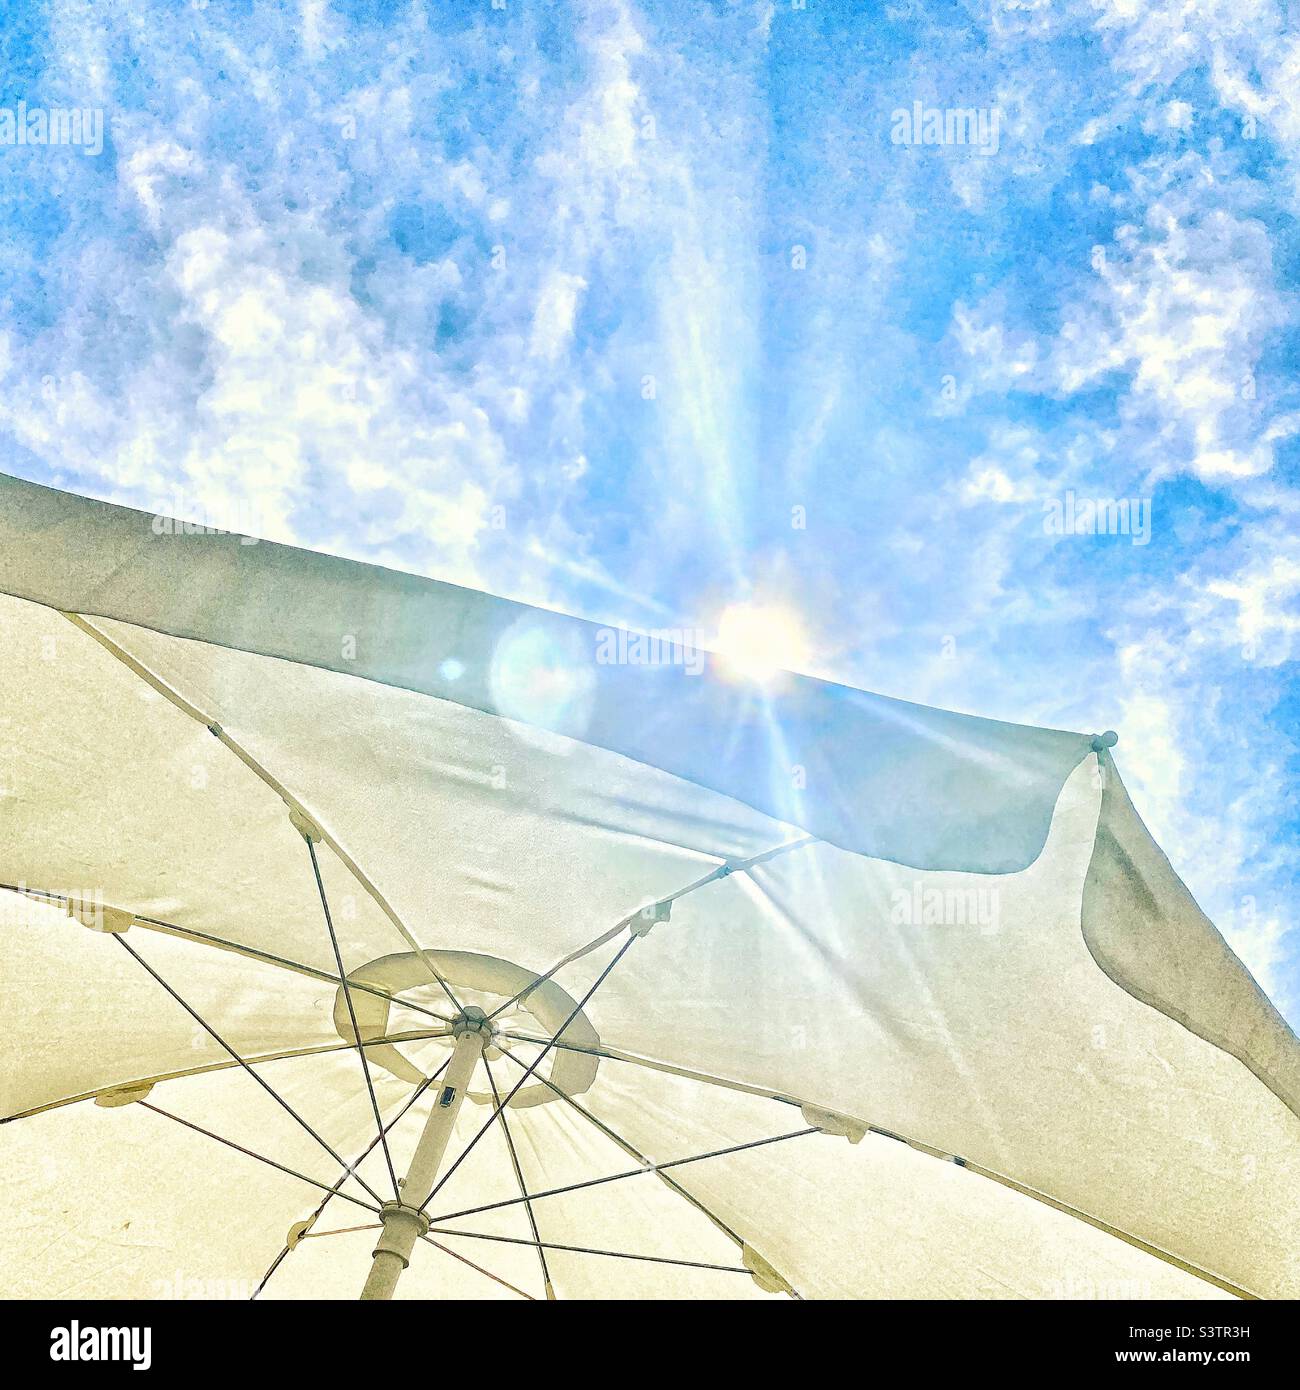 Sun and parasol Stock Photo